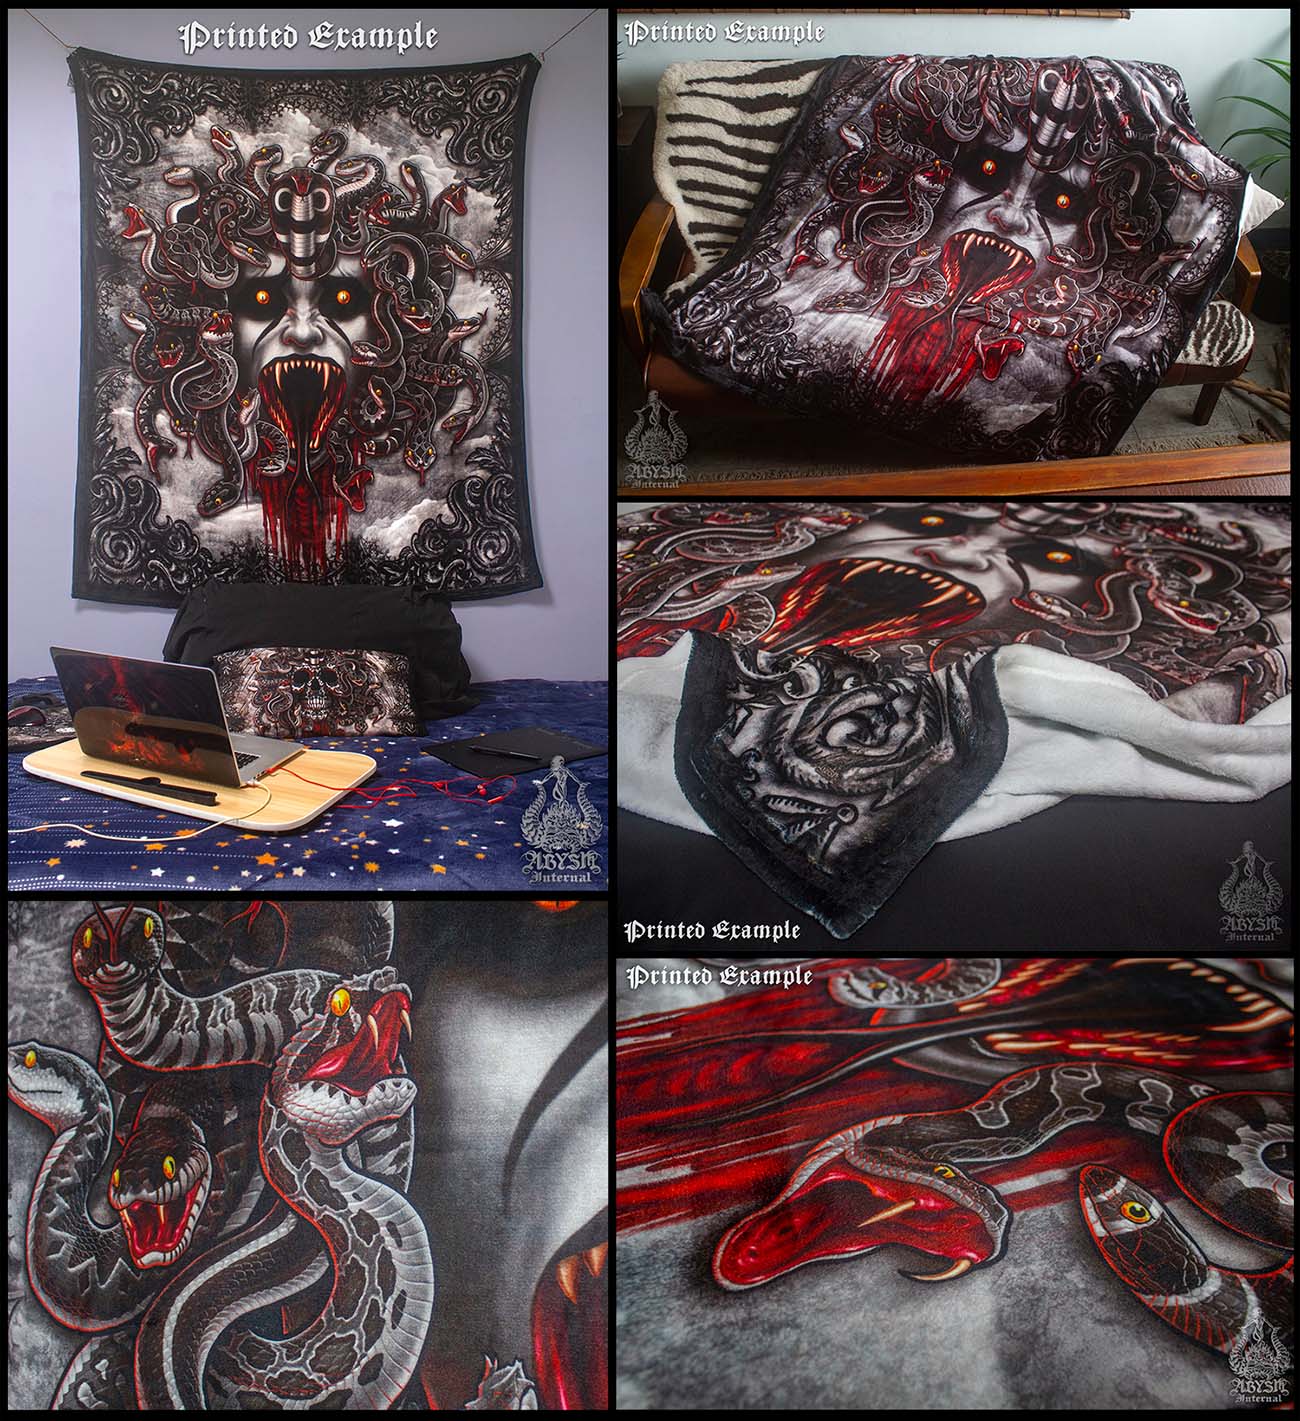 Abysm Internal Tapestry Samples